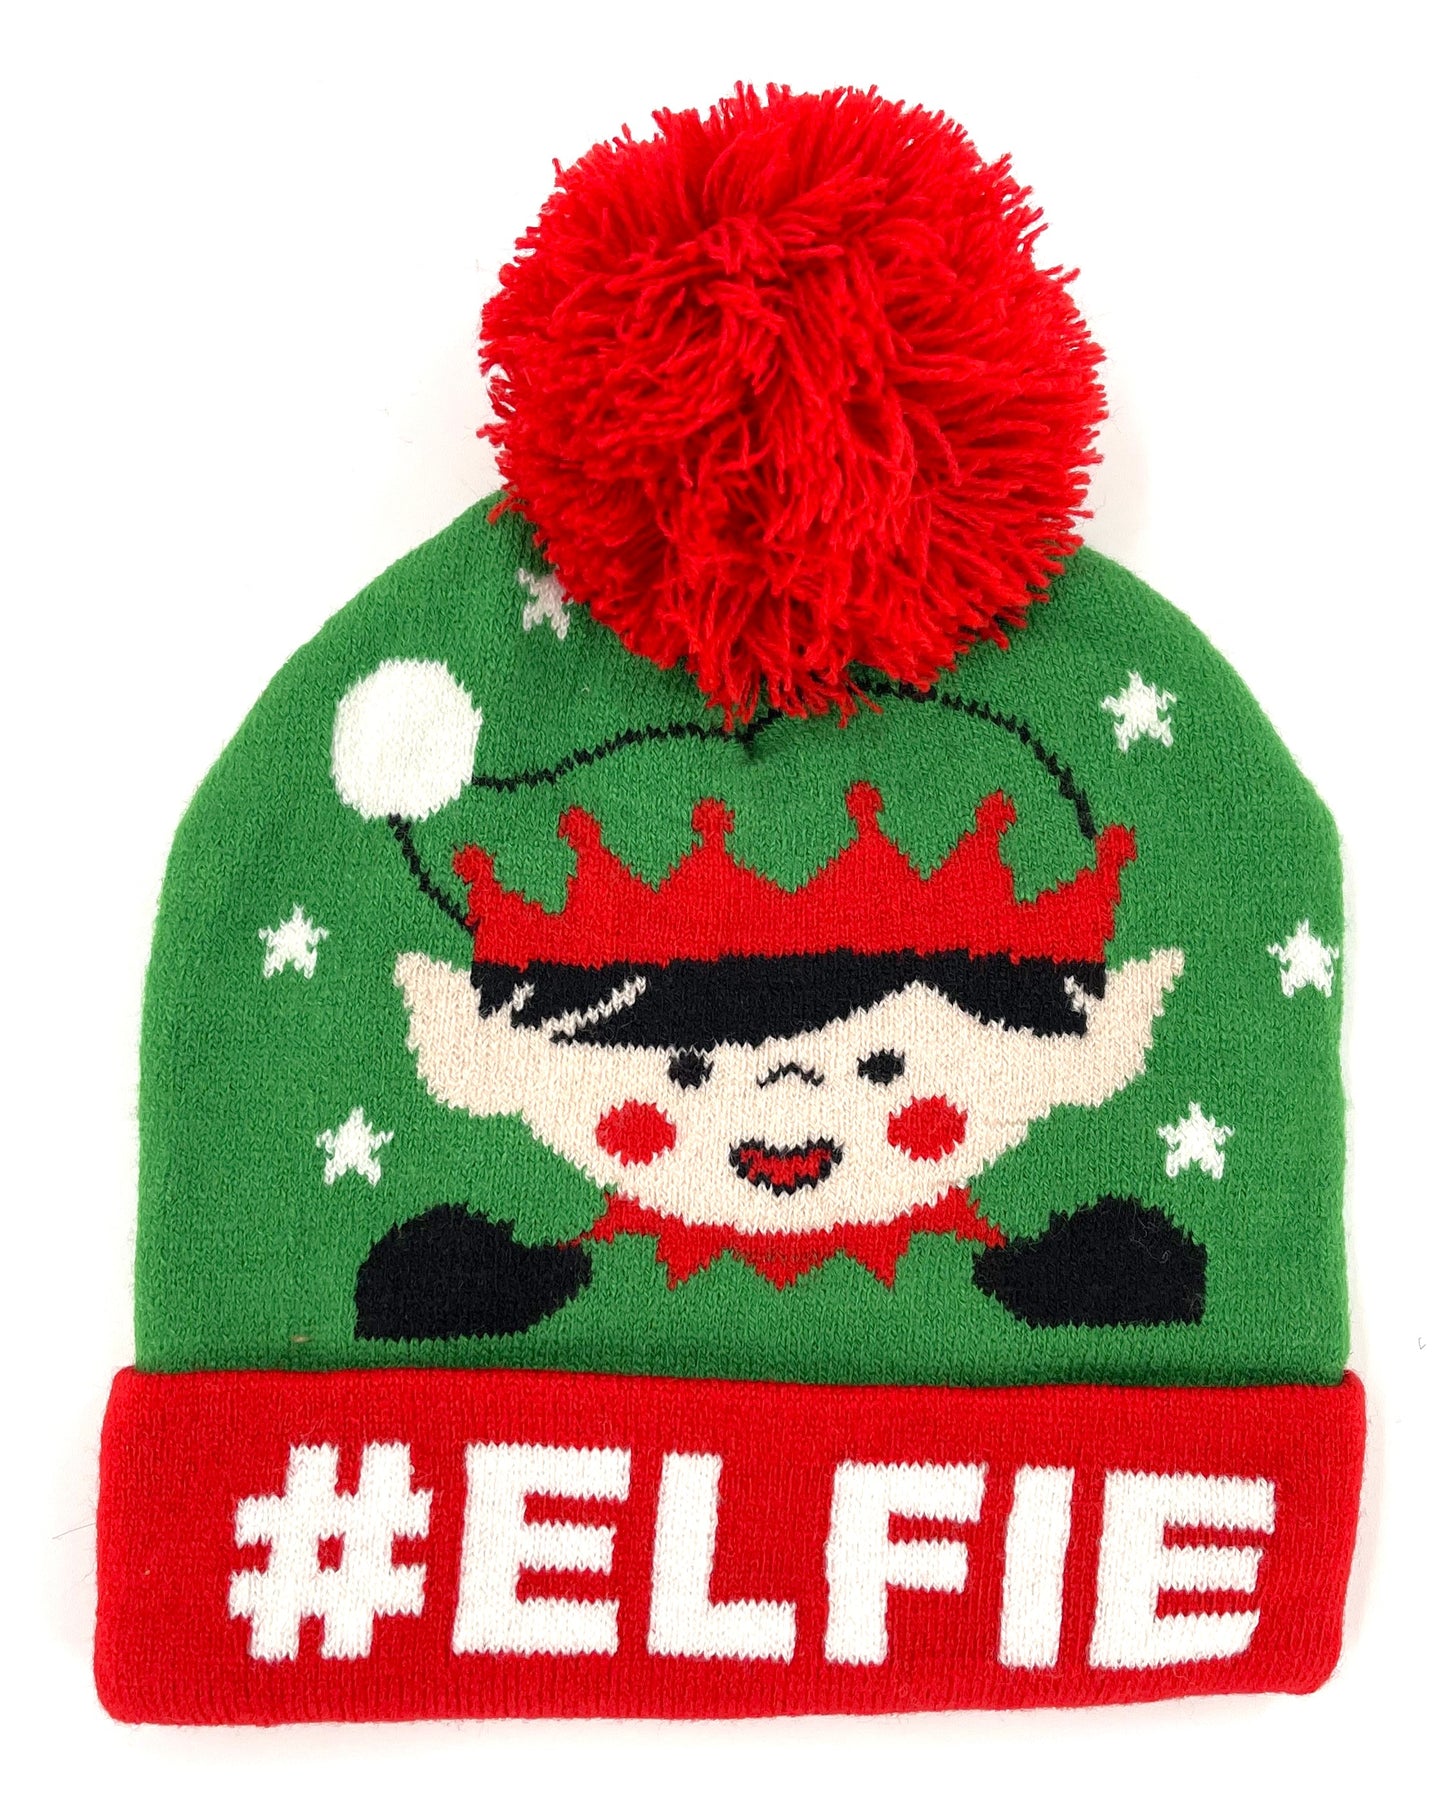 Christmas Elf & Santa Claus Knitted Bobble Hats - 2 Pack Children's